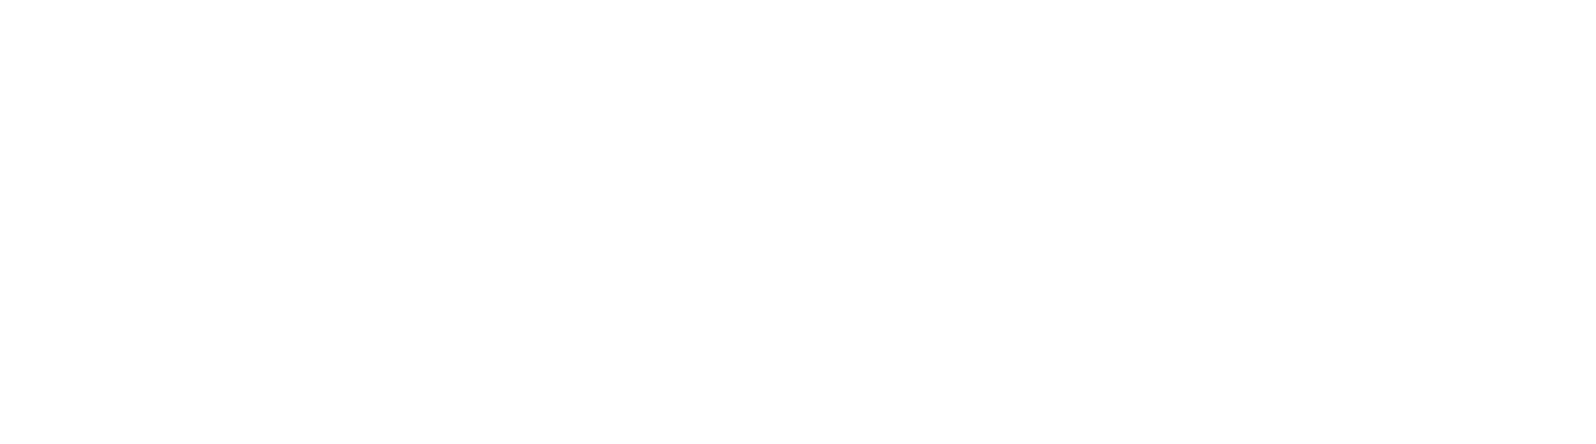 TrustCo Bank logo large for dark backgrounds (transparent PNG)